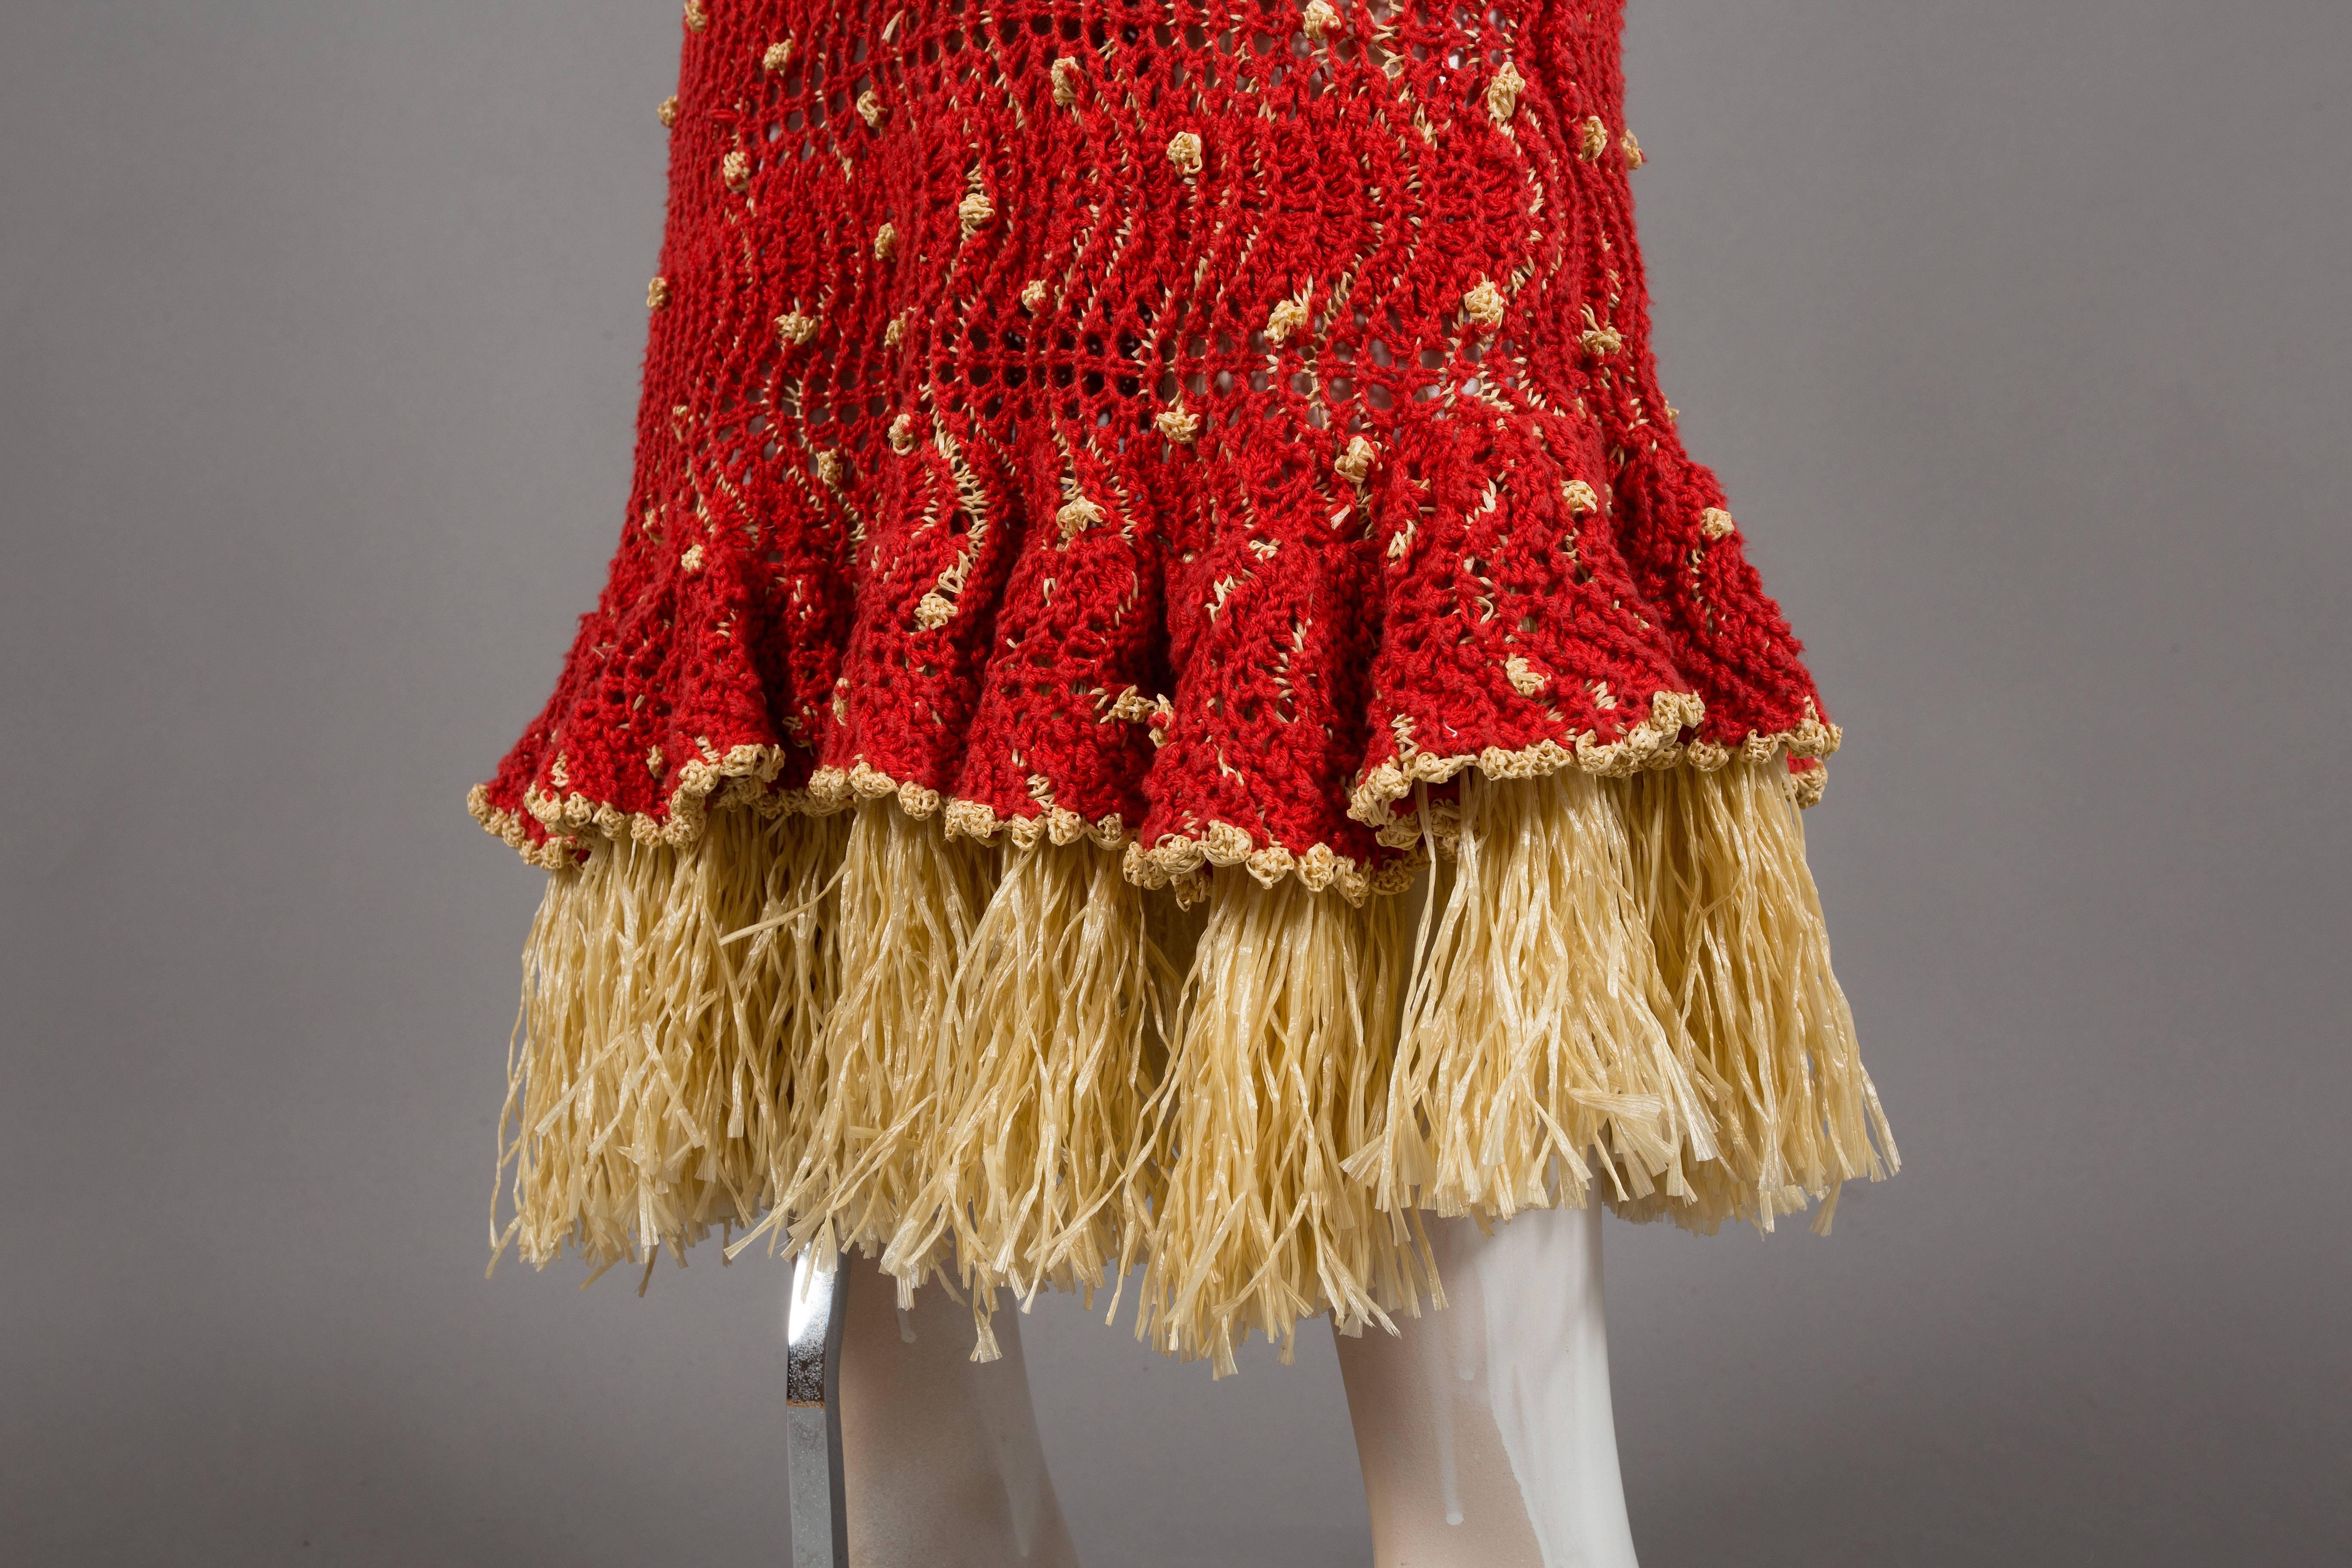 Women's Vivienne Westwood runway rafia knitted dress with floral appliqués, C. 1995